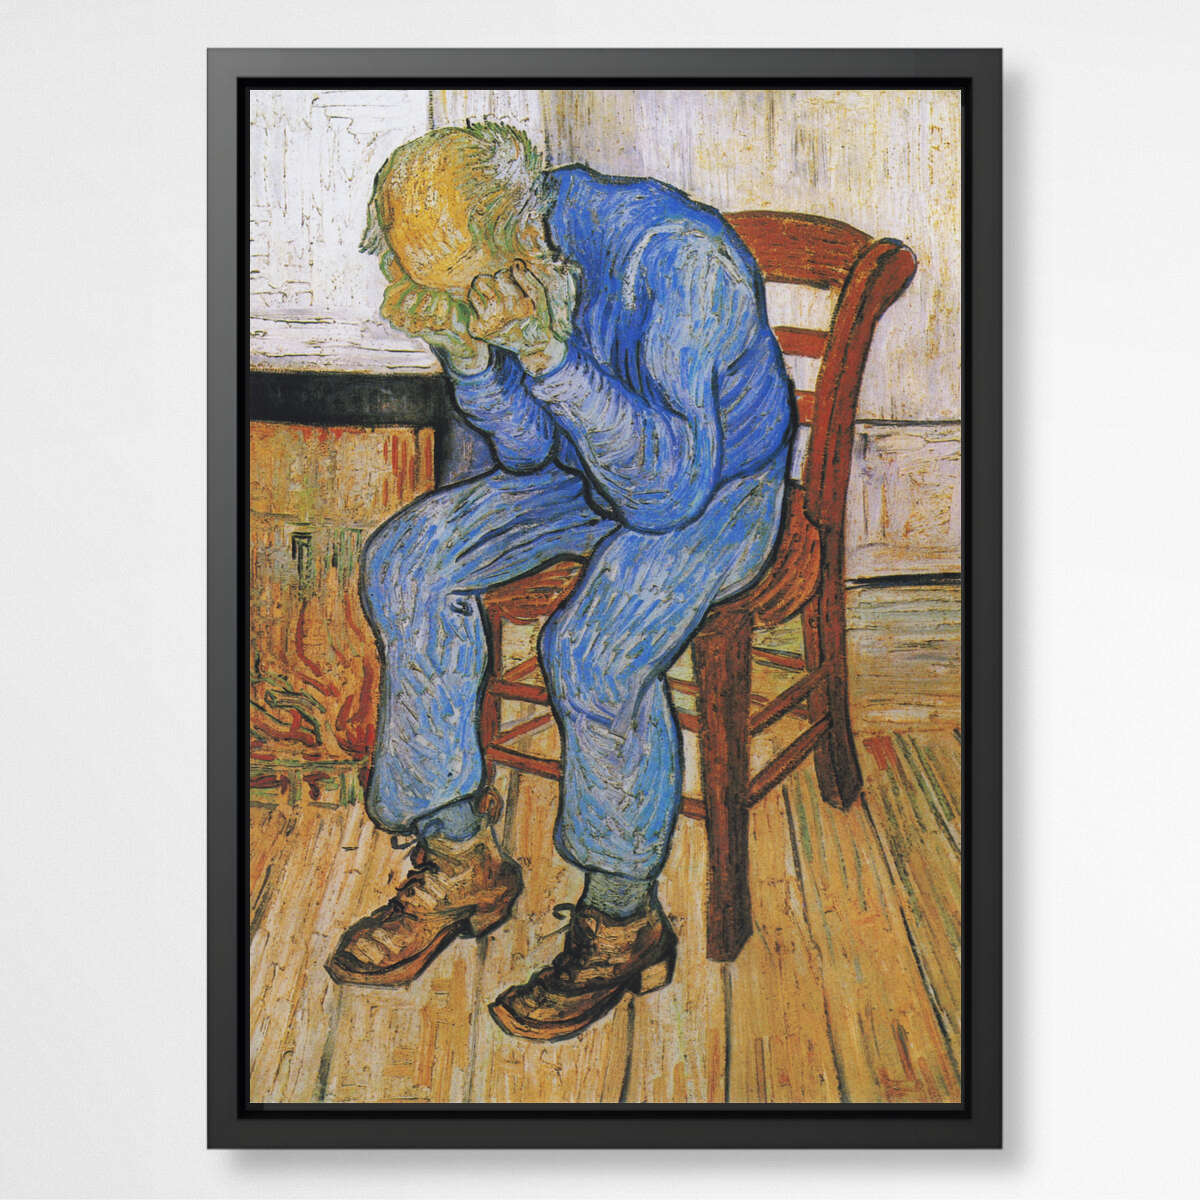 At Eternity's Gate by Vincent Van Gogh | Vincent Van Gogh Wall Art Prints - The Canvas Hive